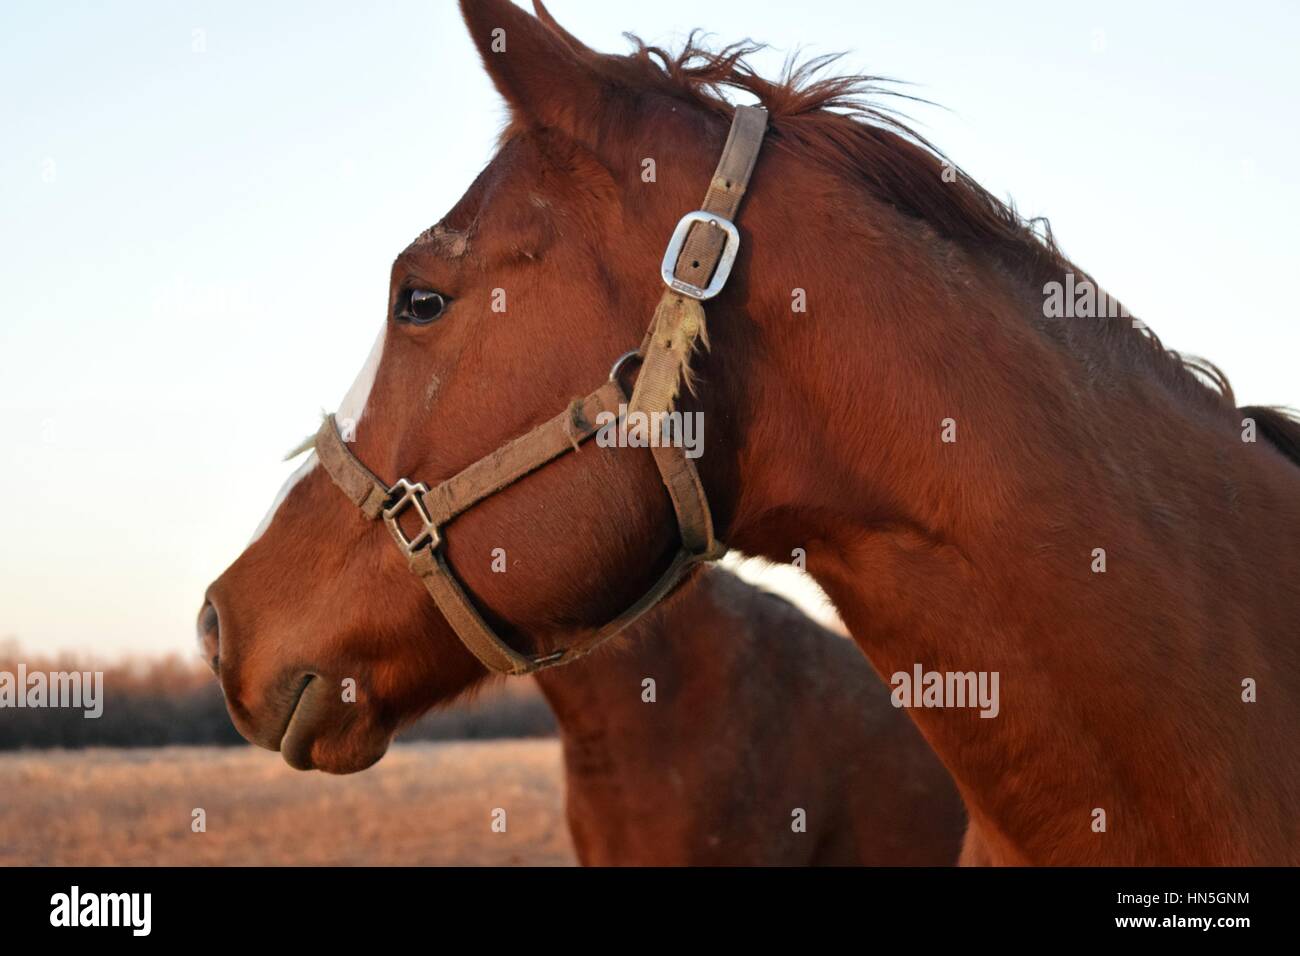 Domestic horses Stock Photo